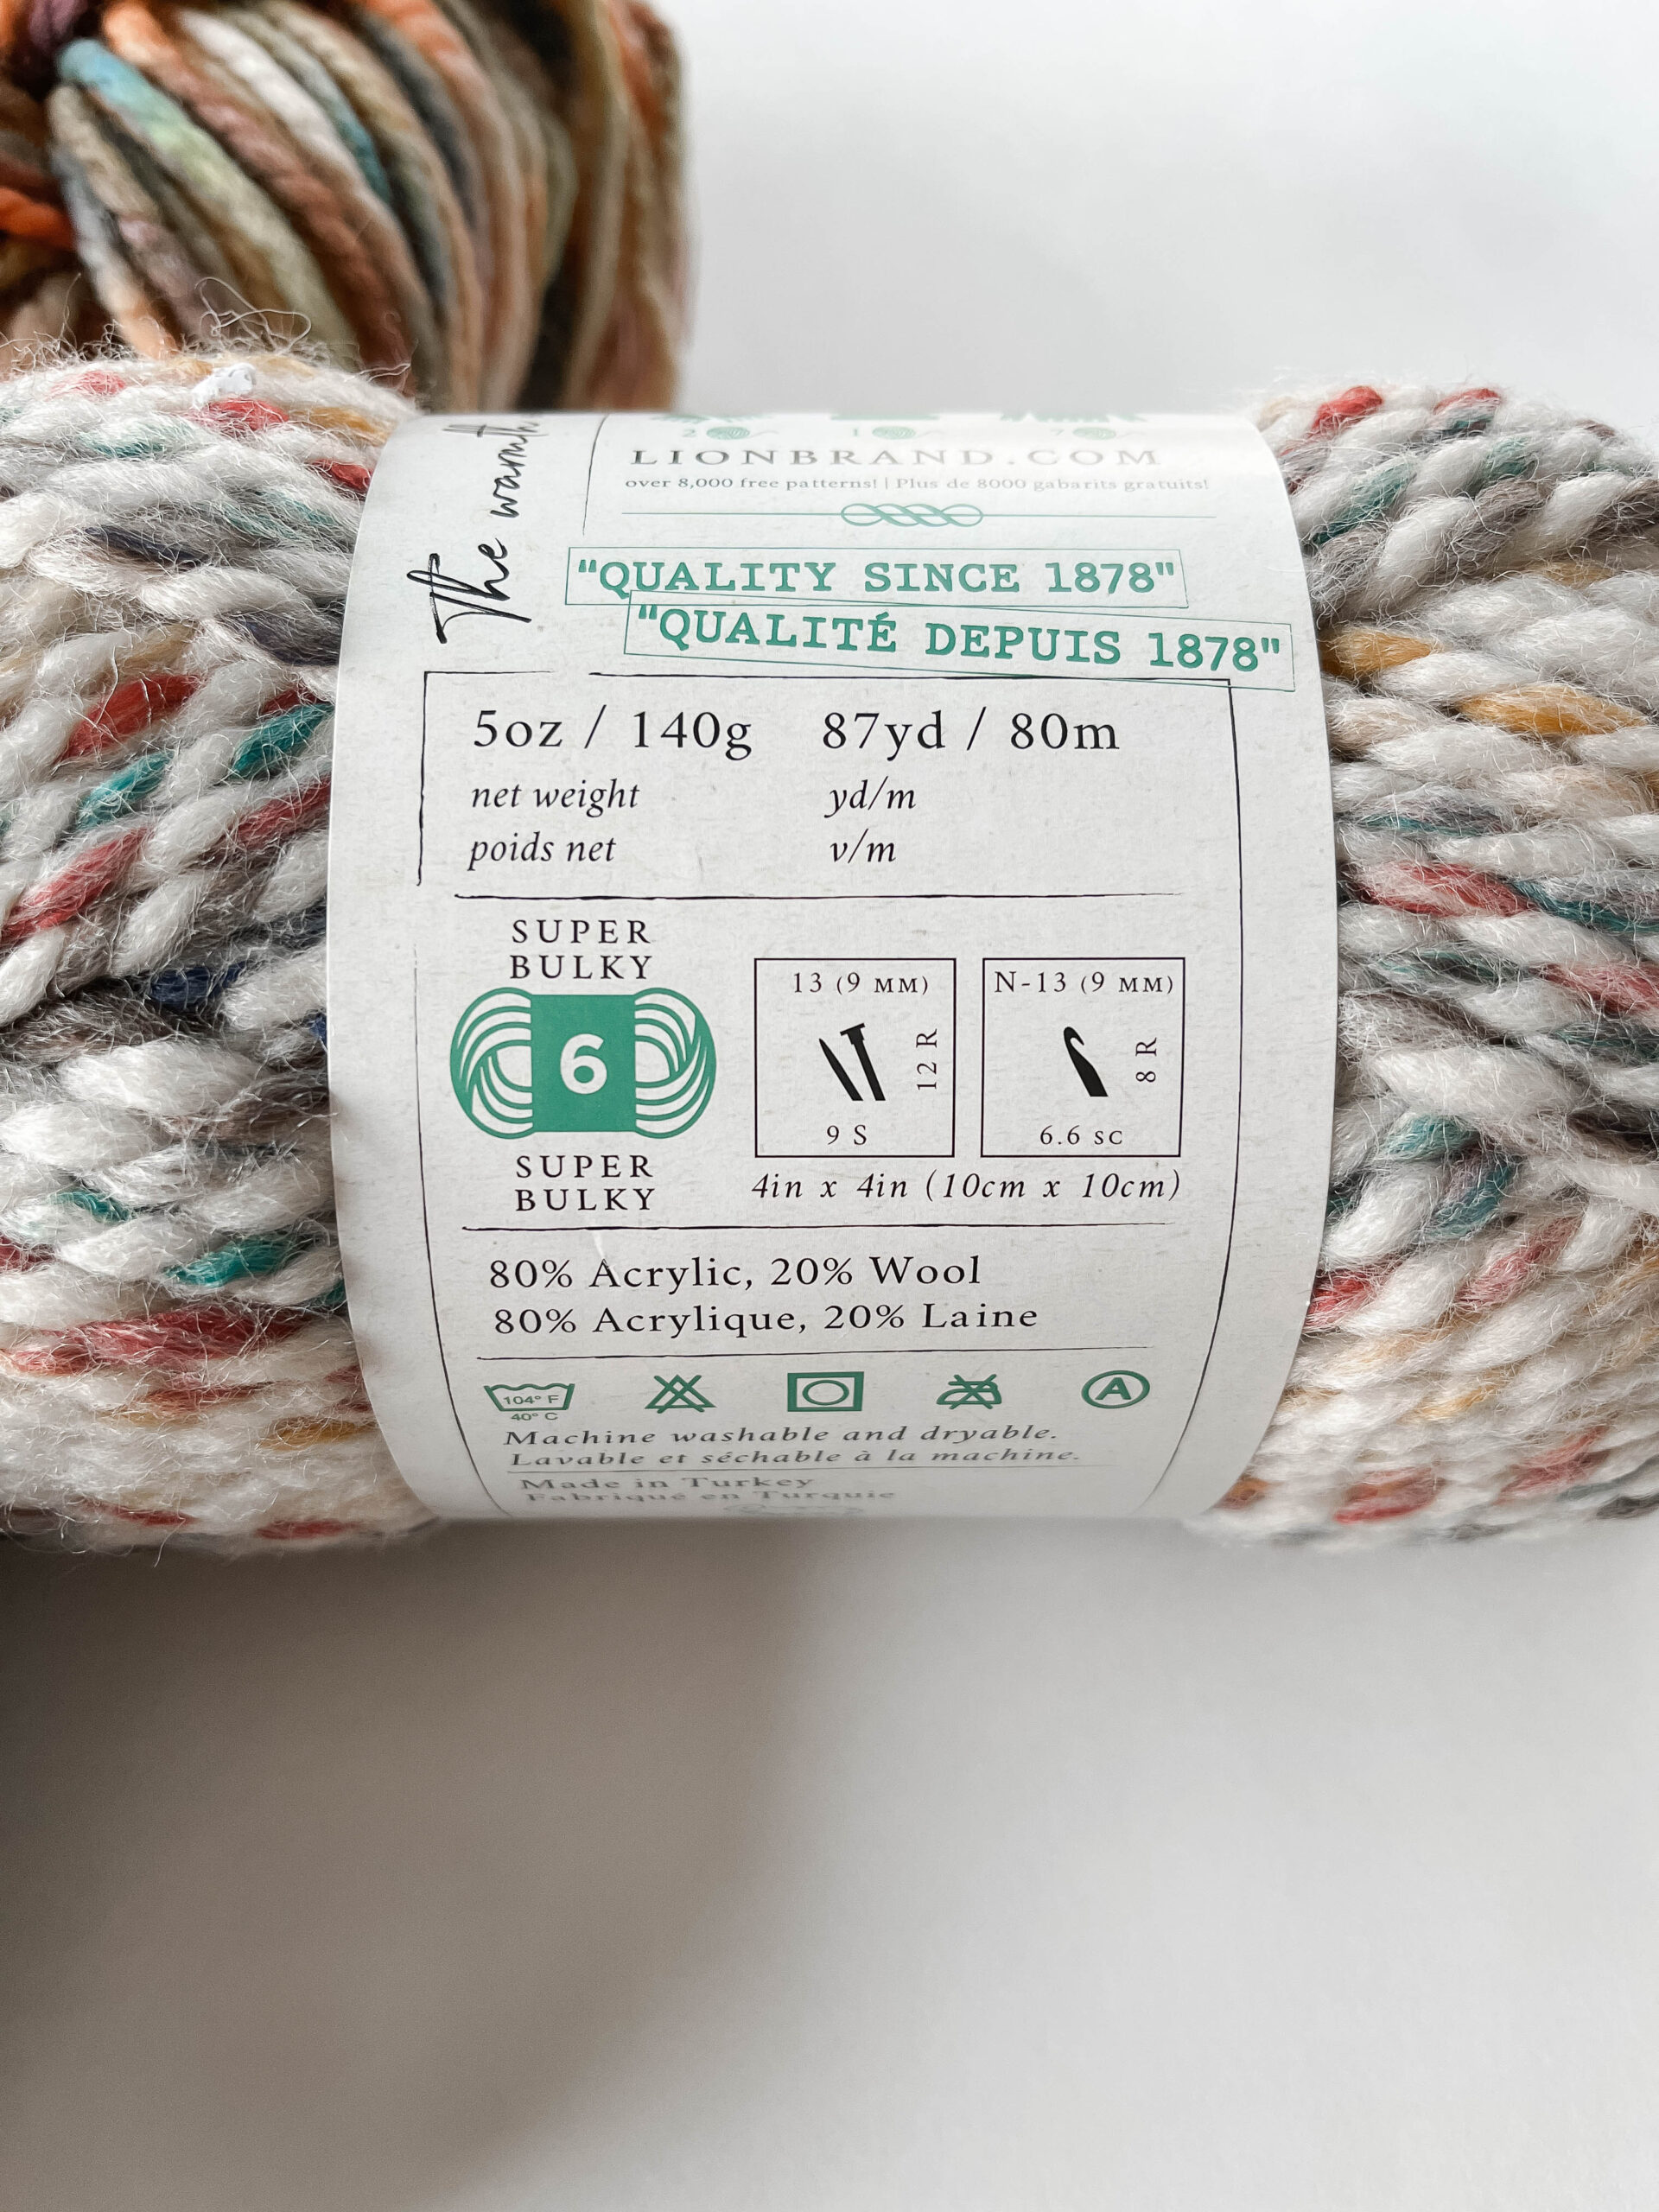 12 alternative ideas for novelty yarn — Sum of their Stories Craft Blog